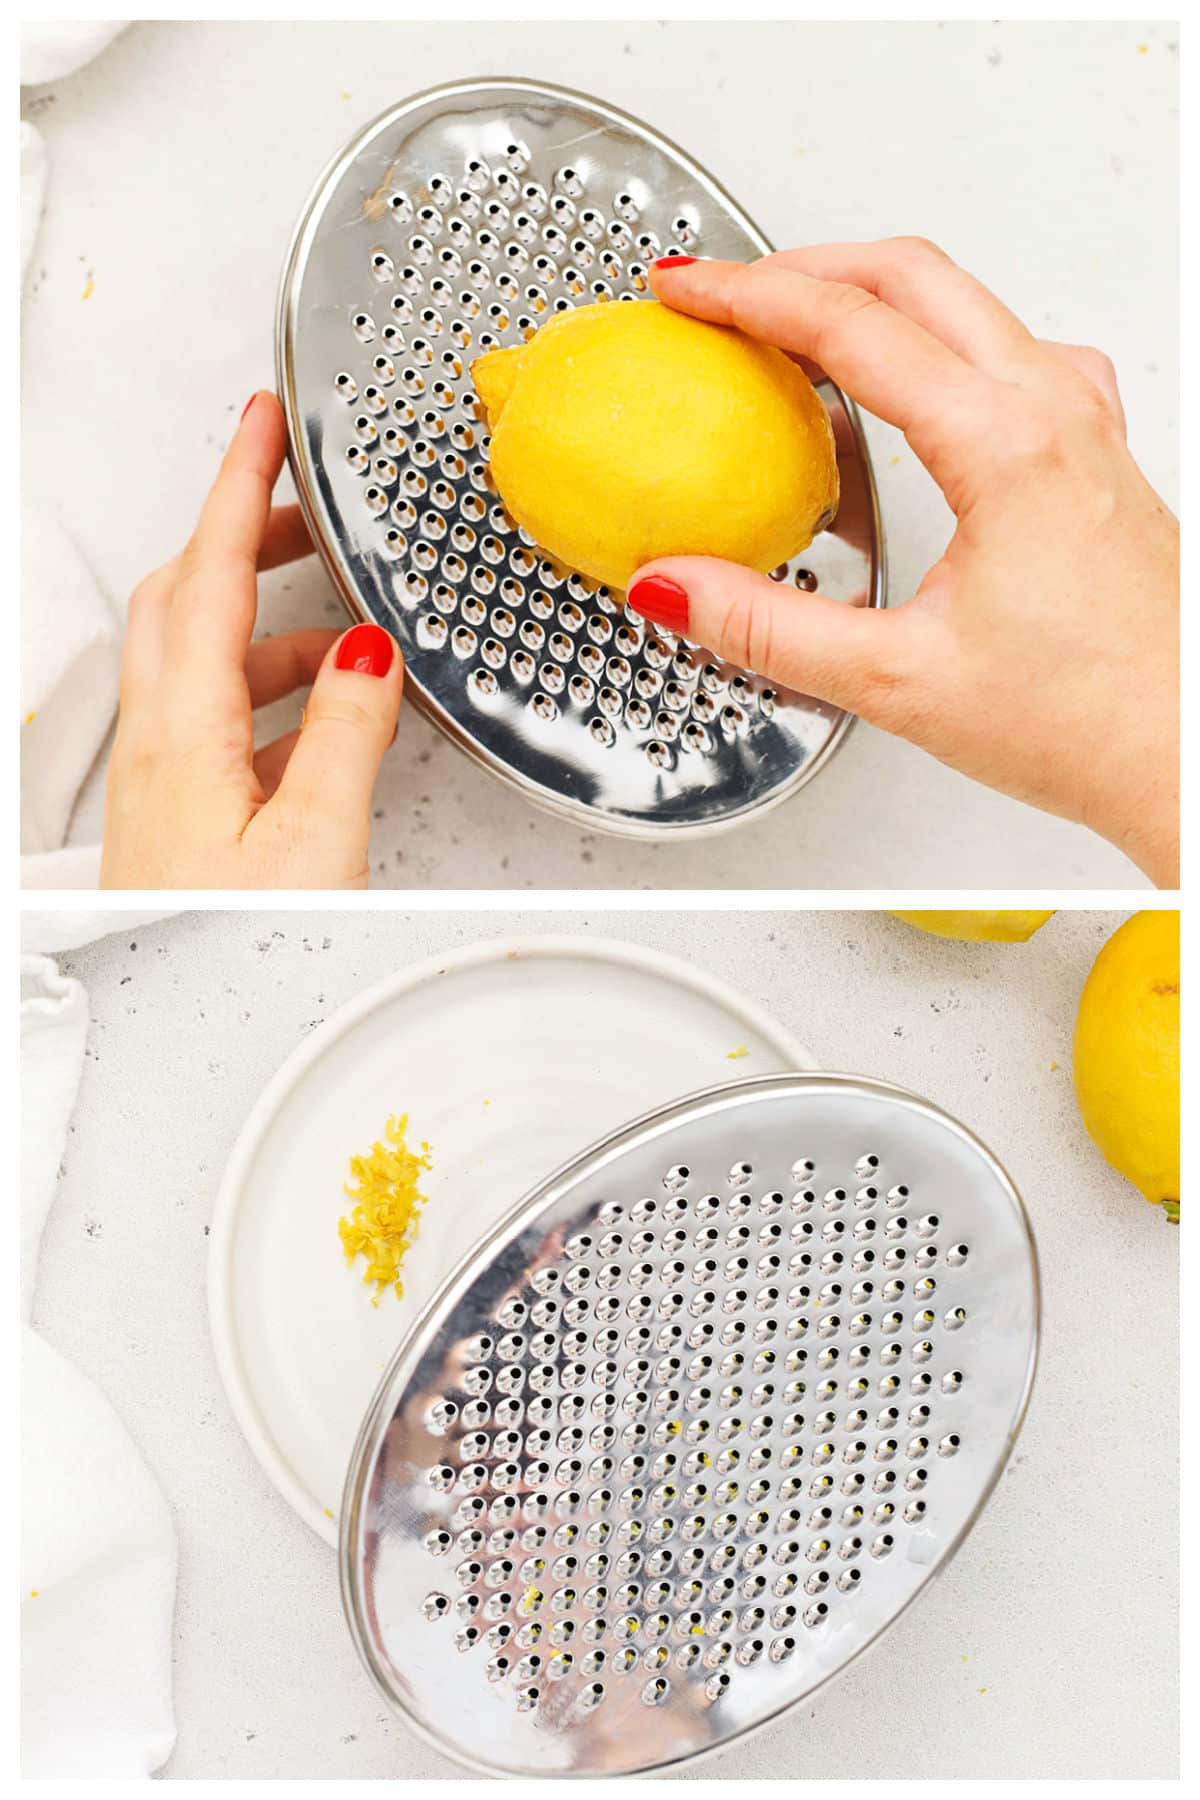 zesting a lemon with a box grater